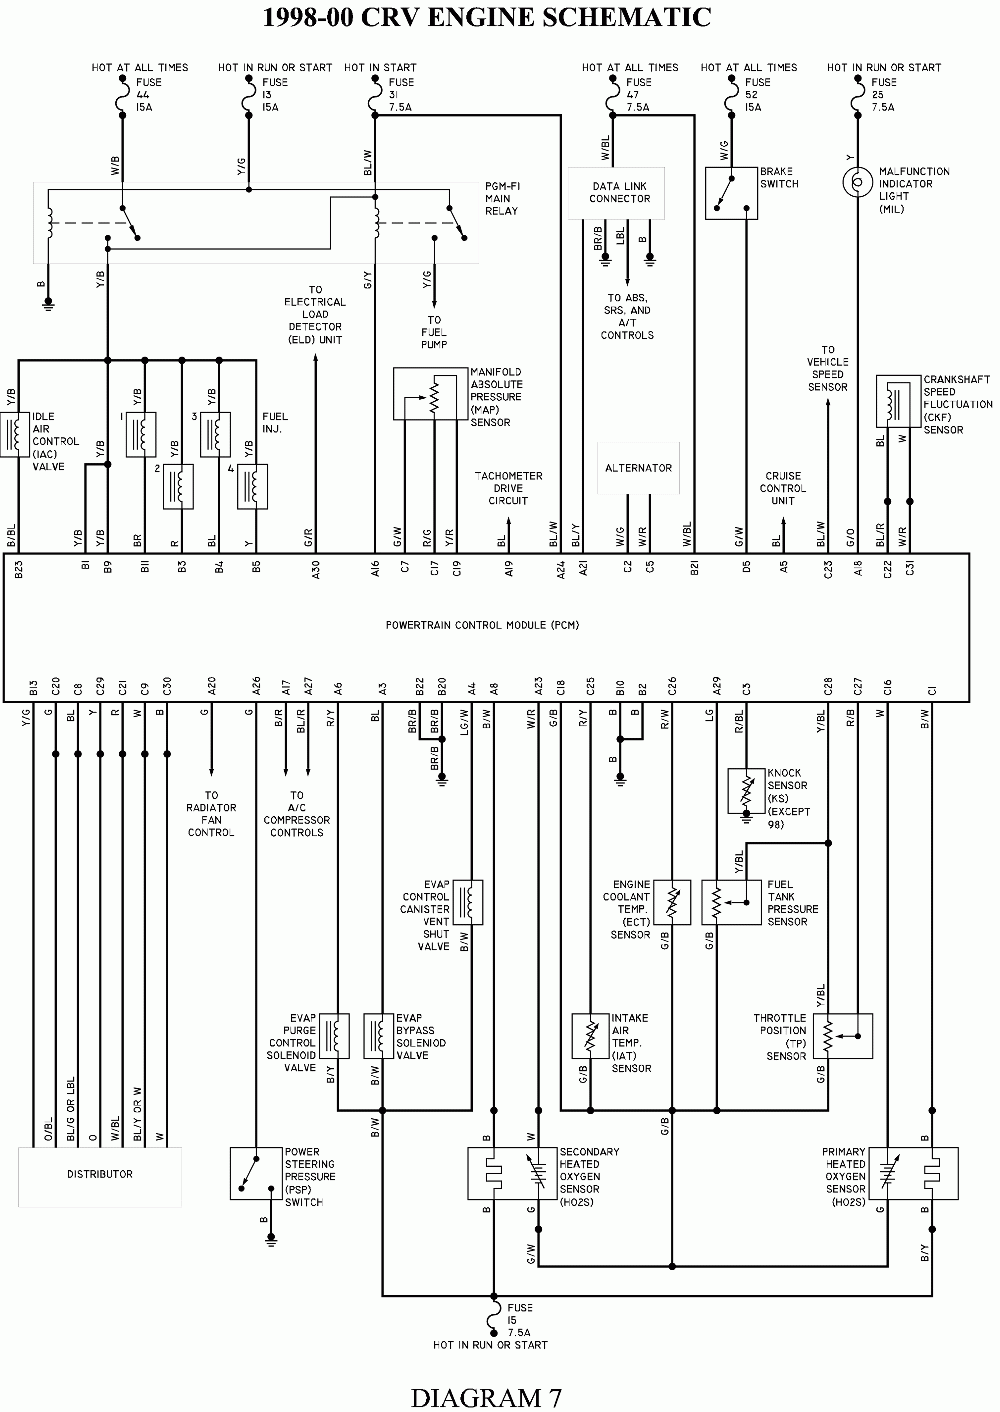 1997 Honda Crv Wiring Diagram